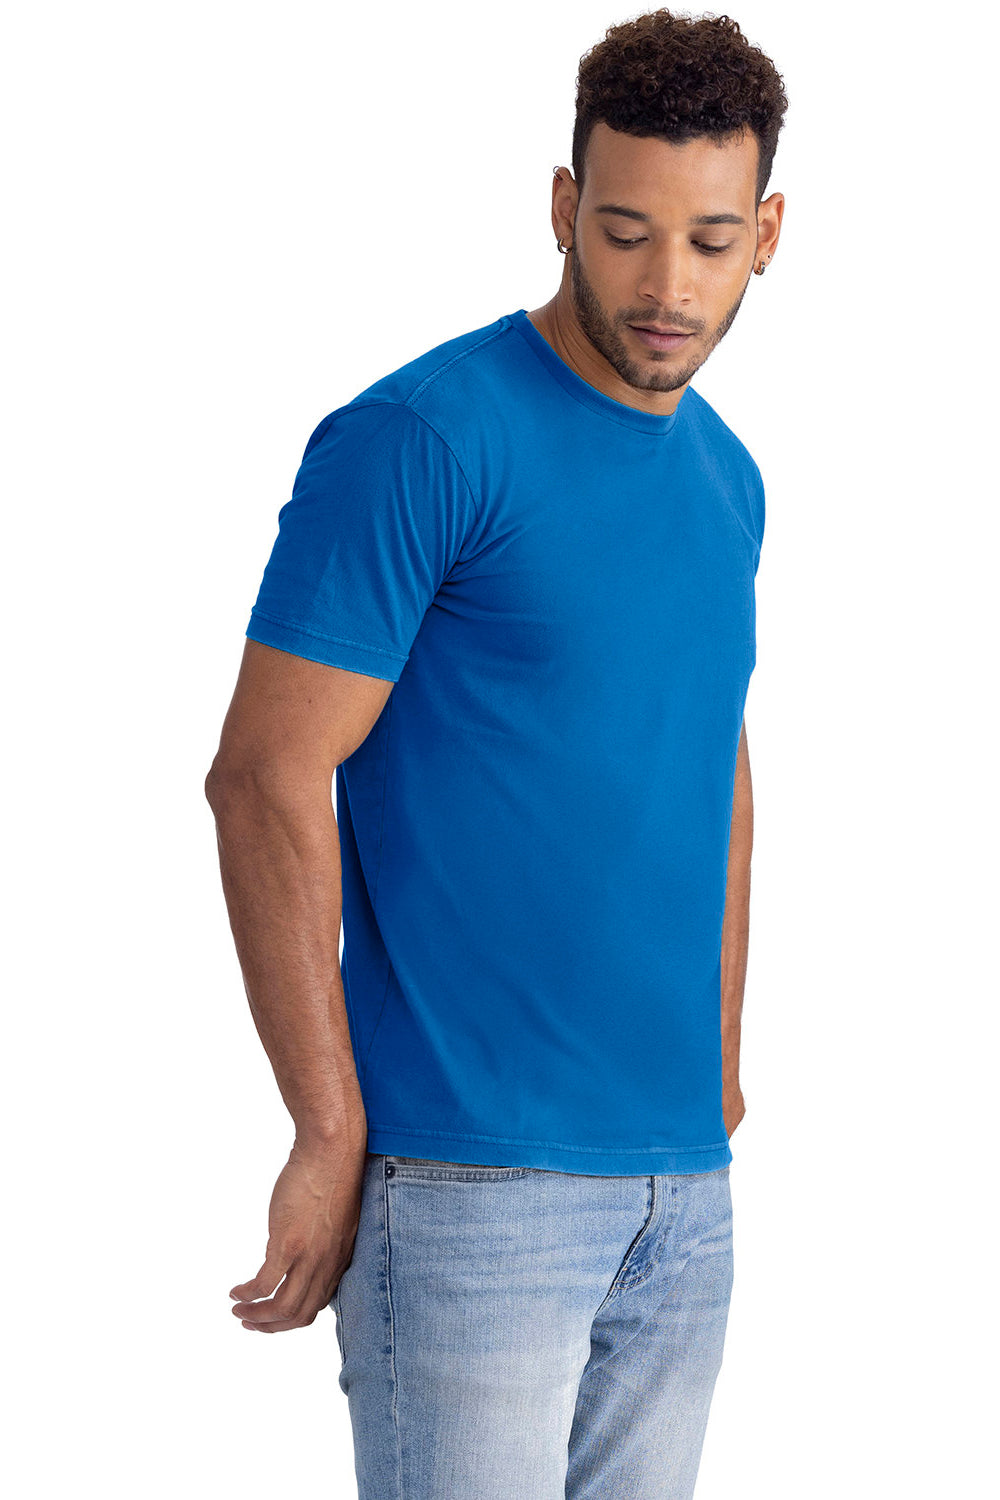 Next Level 3600SW Mens Soft Wash Short Sleeve Crewneck T-Shirt Royal Blue Side